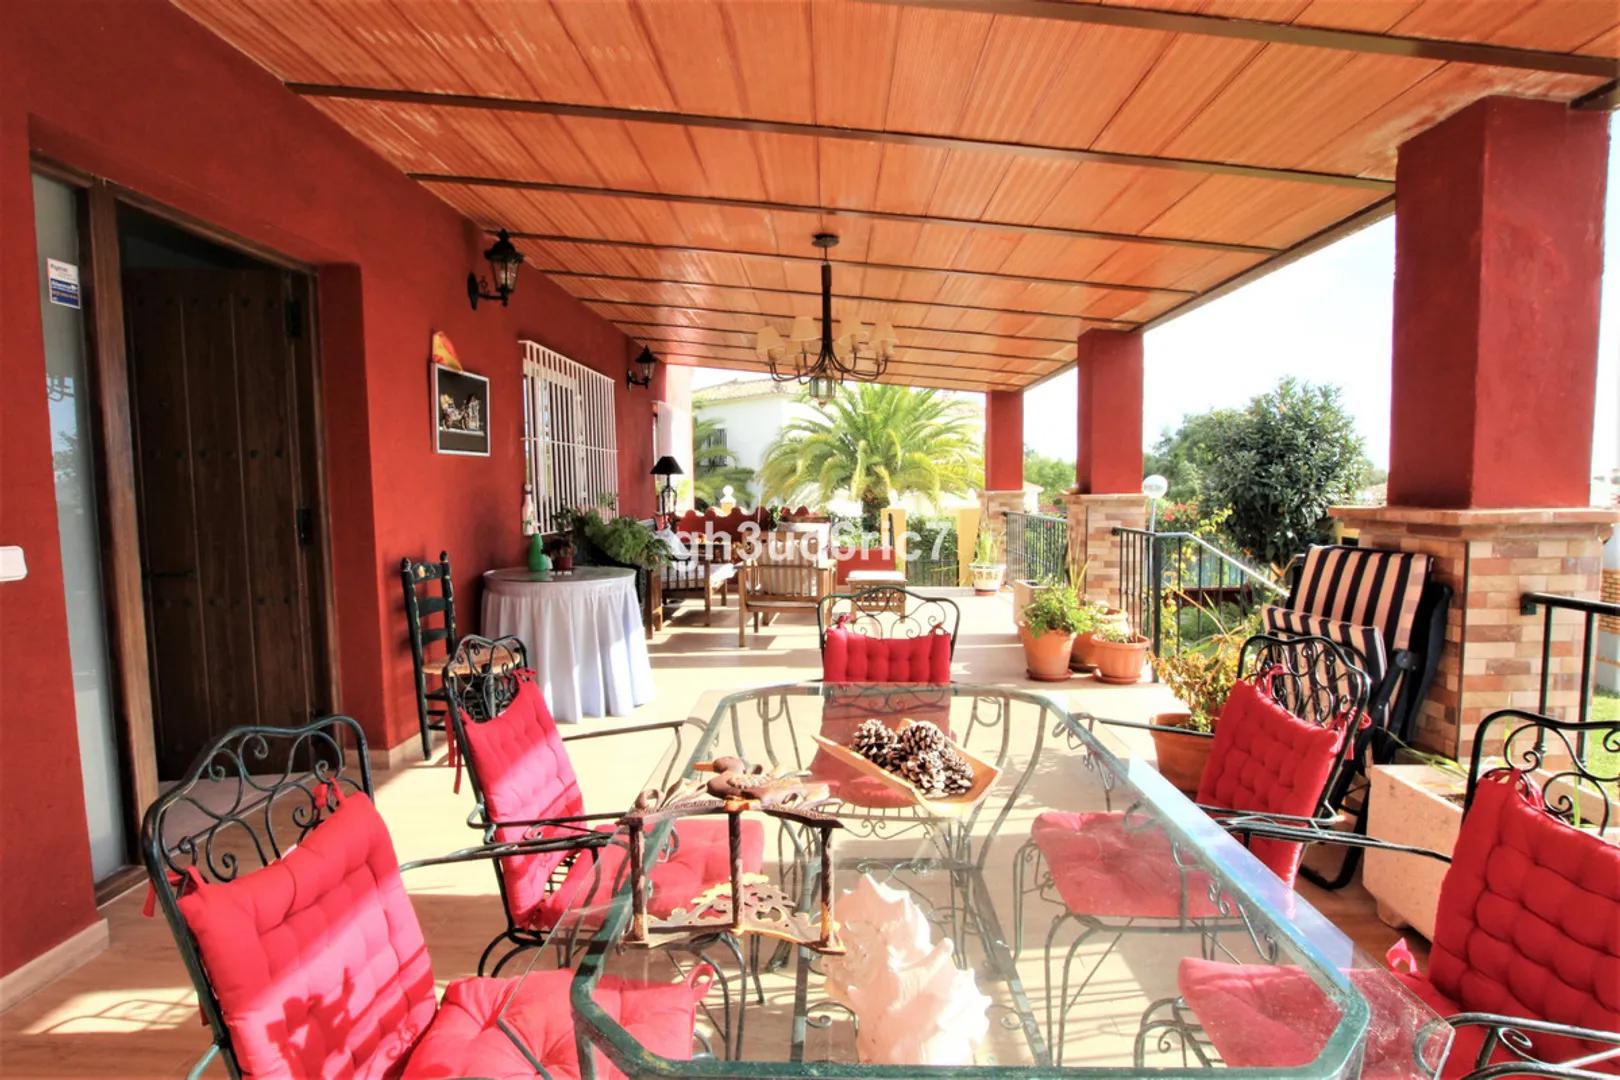 4-bedroom villa in gated community in Calahonda